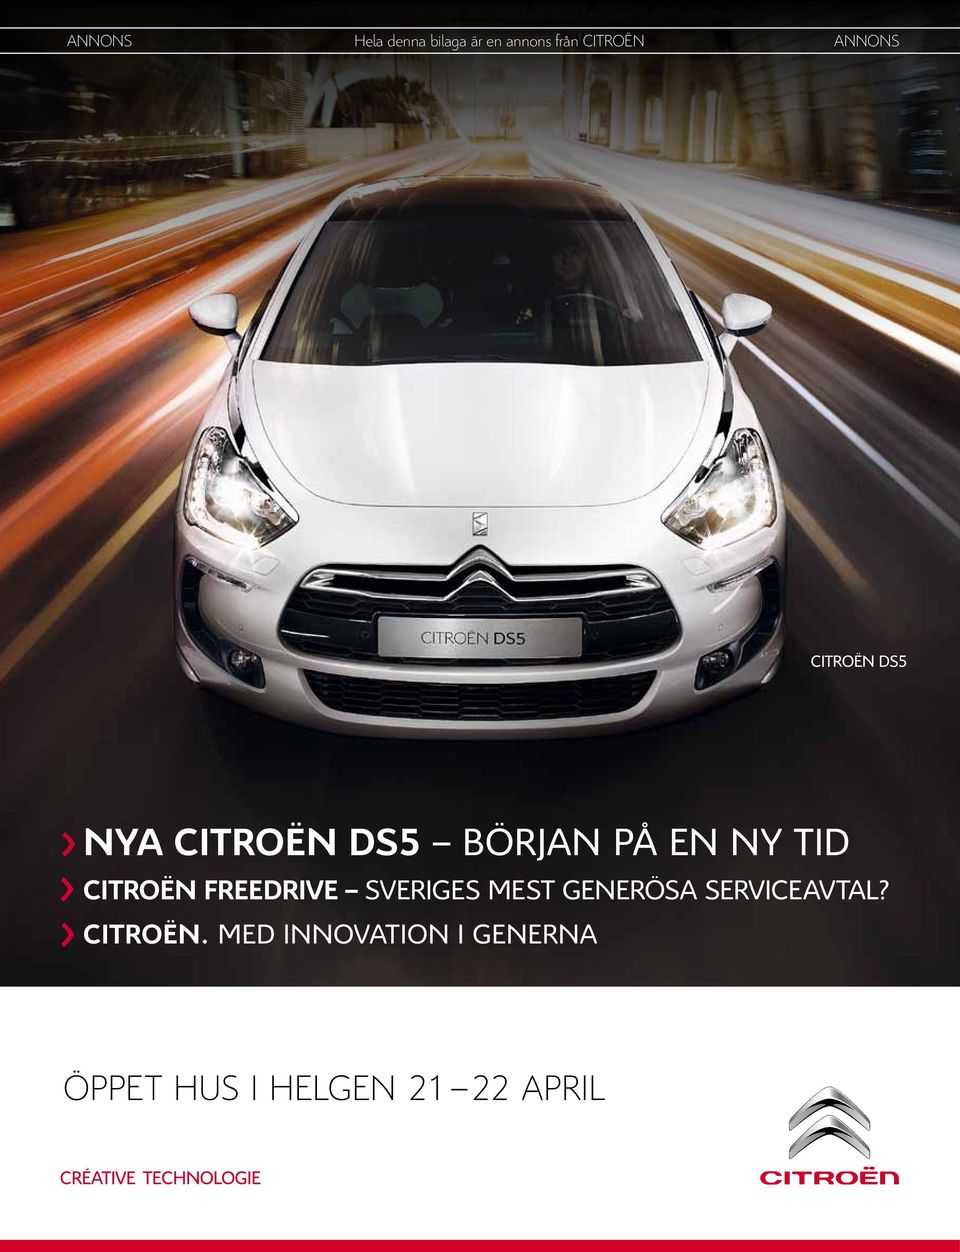 Citroën FreeDrive Sveriges mest generösa serviceavtal?